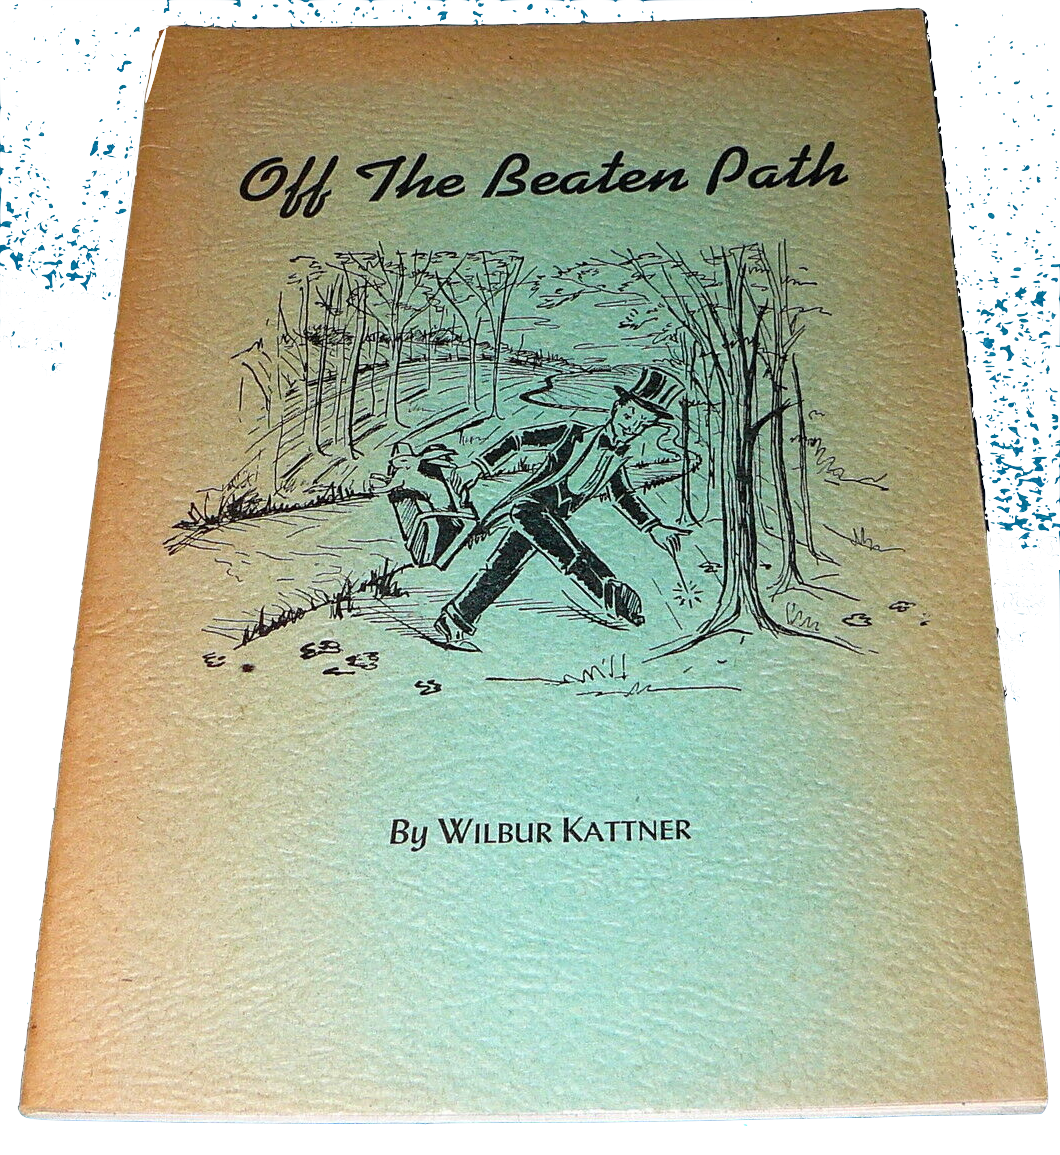 Off The Beaten Path by Wilbur Kattner